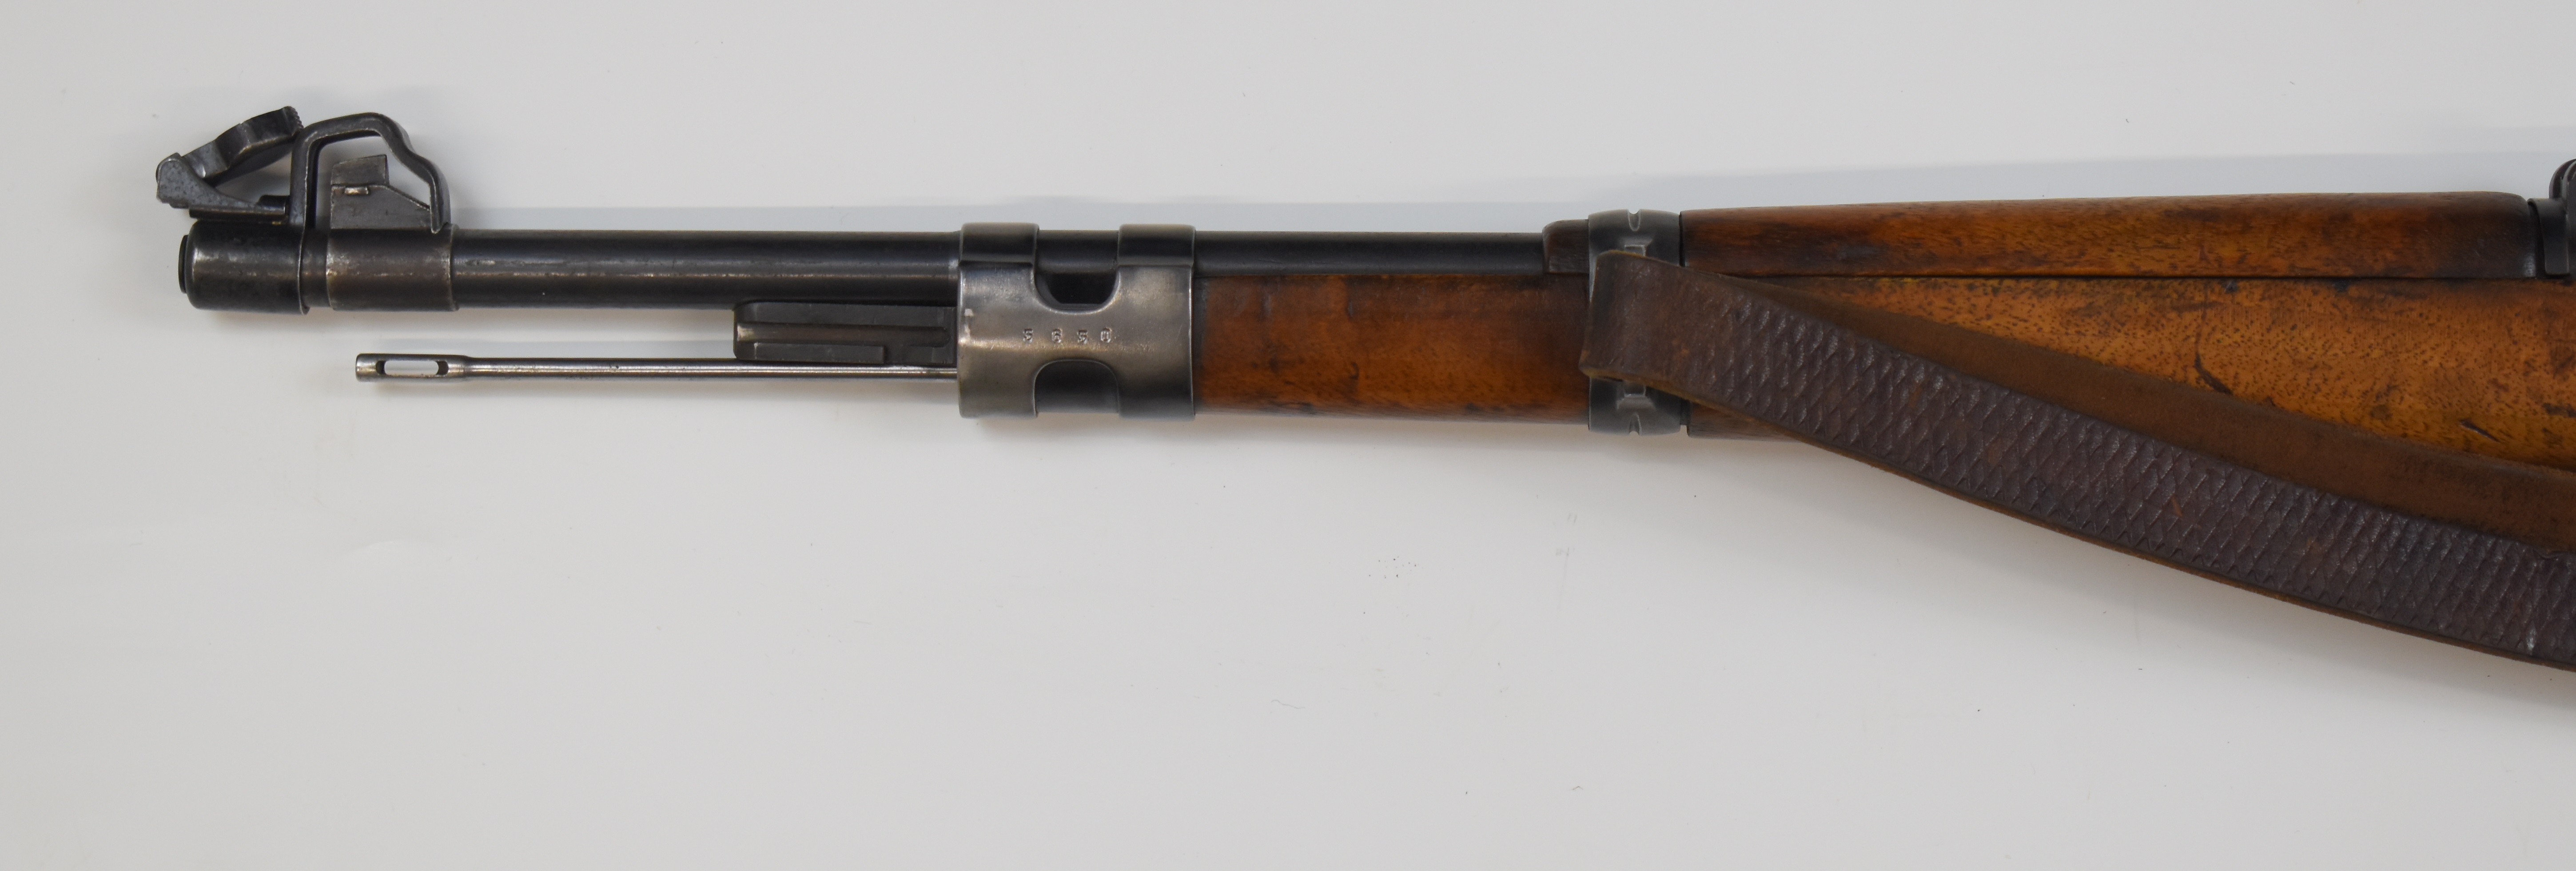 German Mauser Model K98 7.92 bolt-action rifle with receiver stamped '27 1940', adjustable sights, - Image 9 of 9